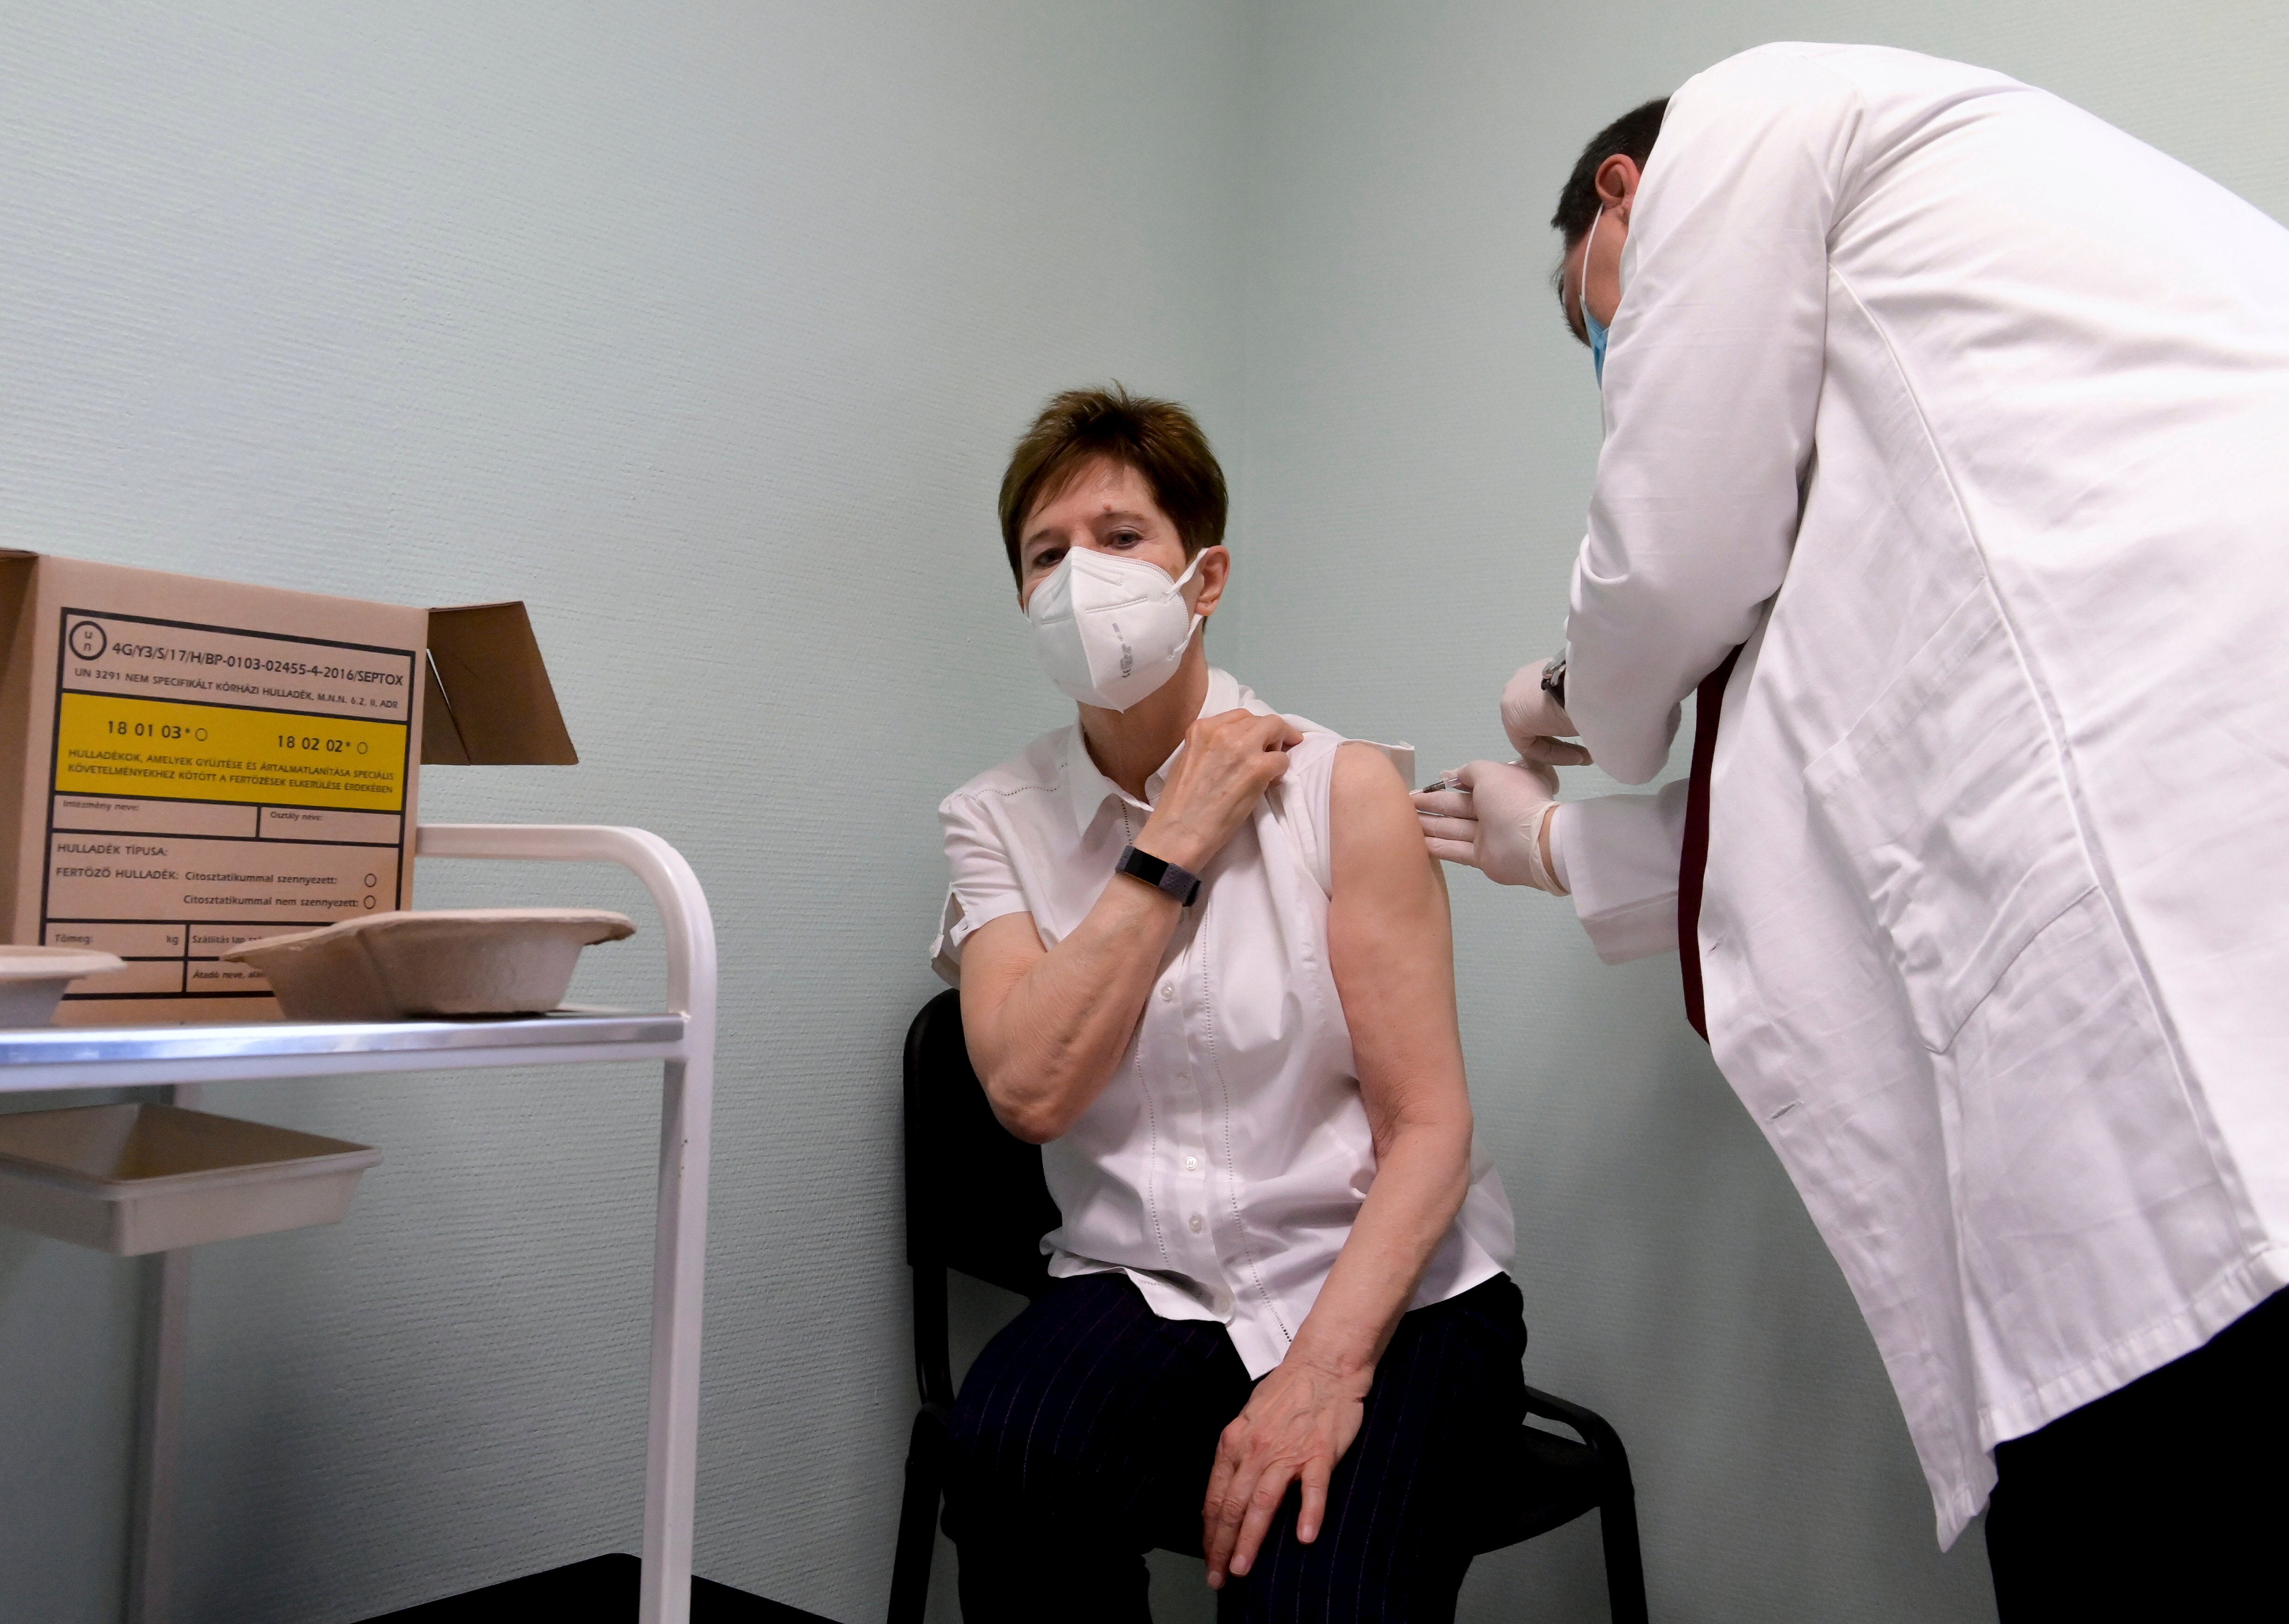 Hungary began vaccinating people on Saturday